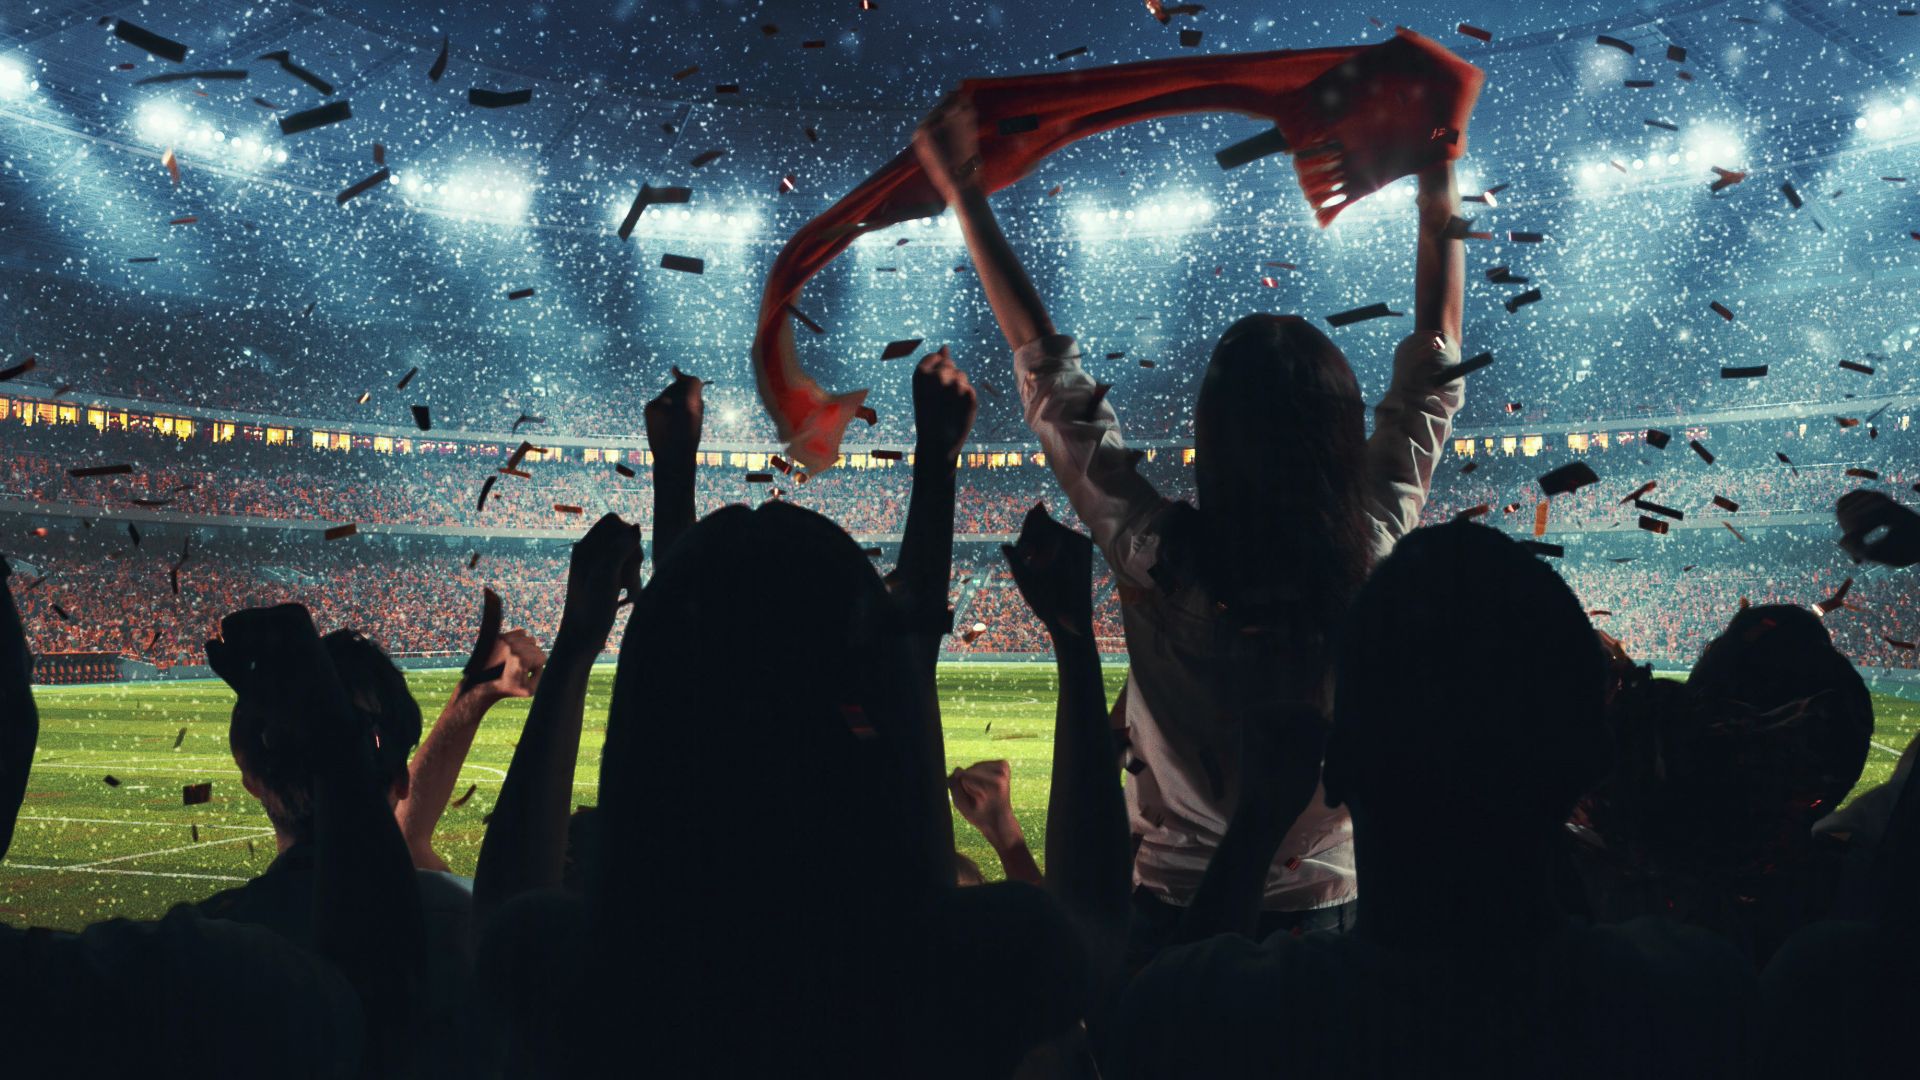 People cheering inside a stadium